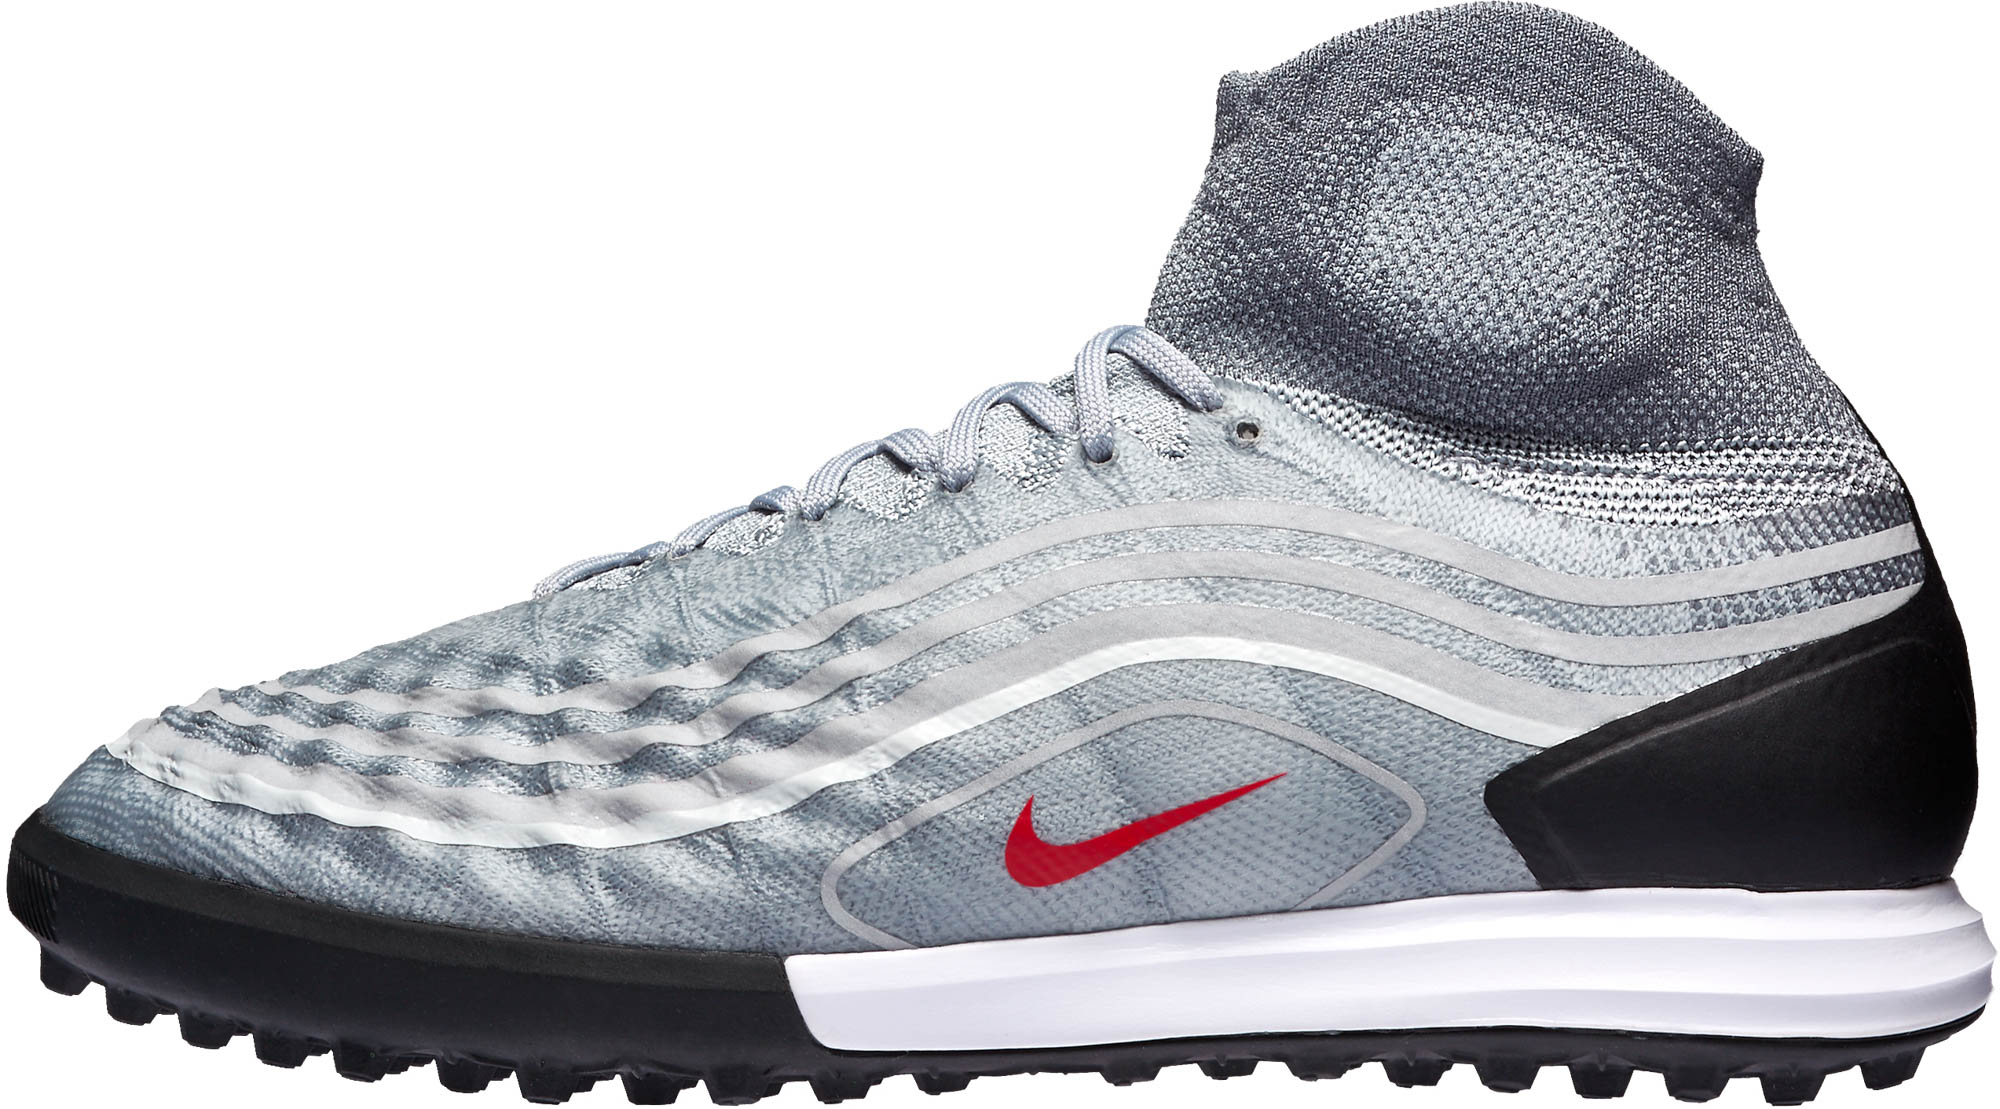 Entretenimiento Pelearse Detallado Nike MagistaX Proximo II Turf Soccer Shoes - Cool Grey